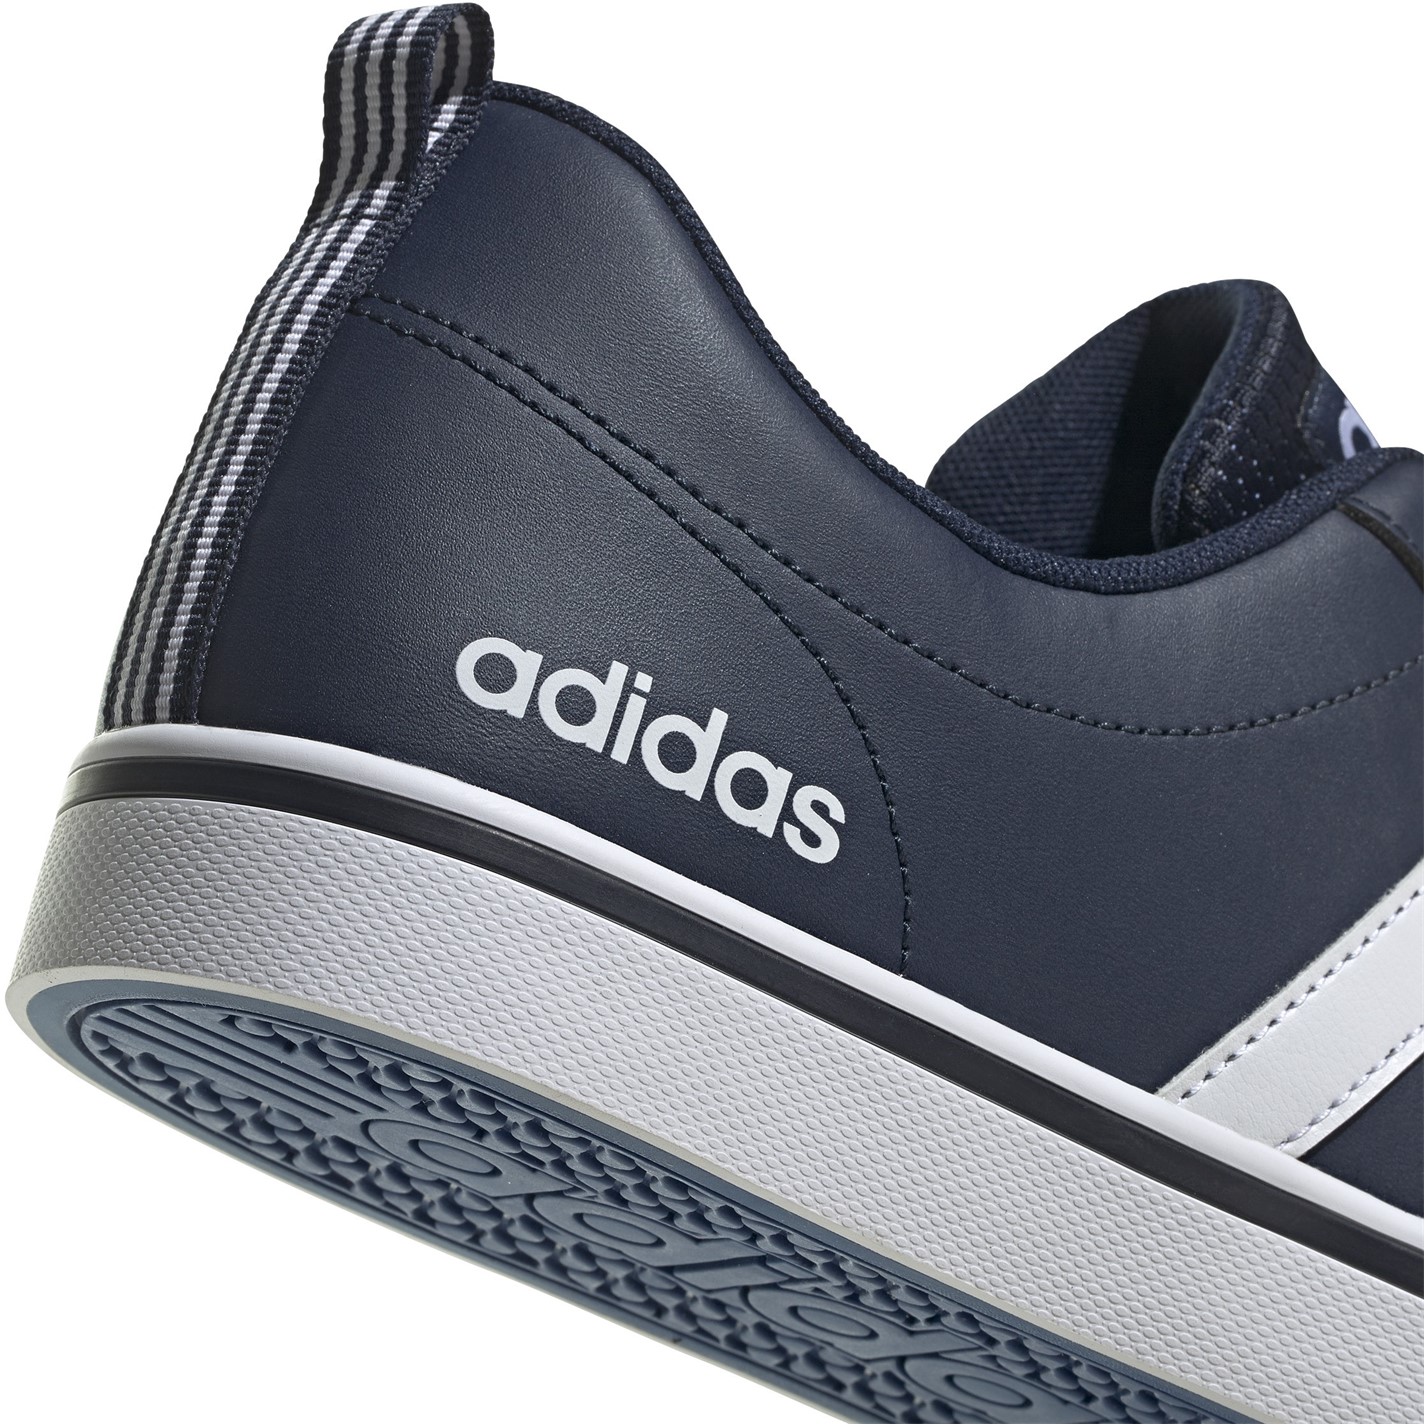 Adidasi sport adidas VS Pace pentru Barbati bleumarin alb